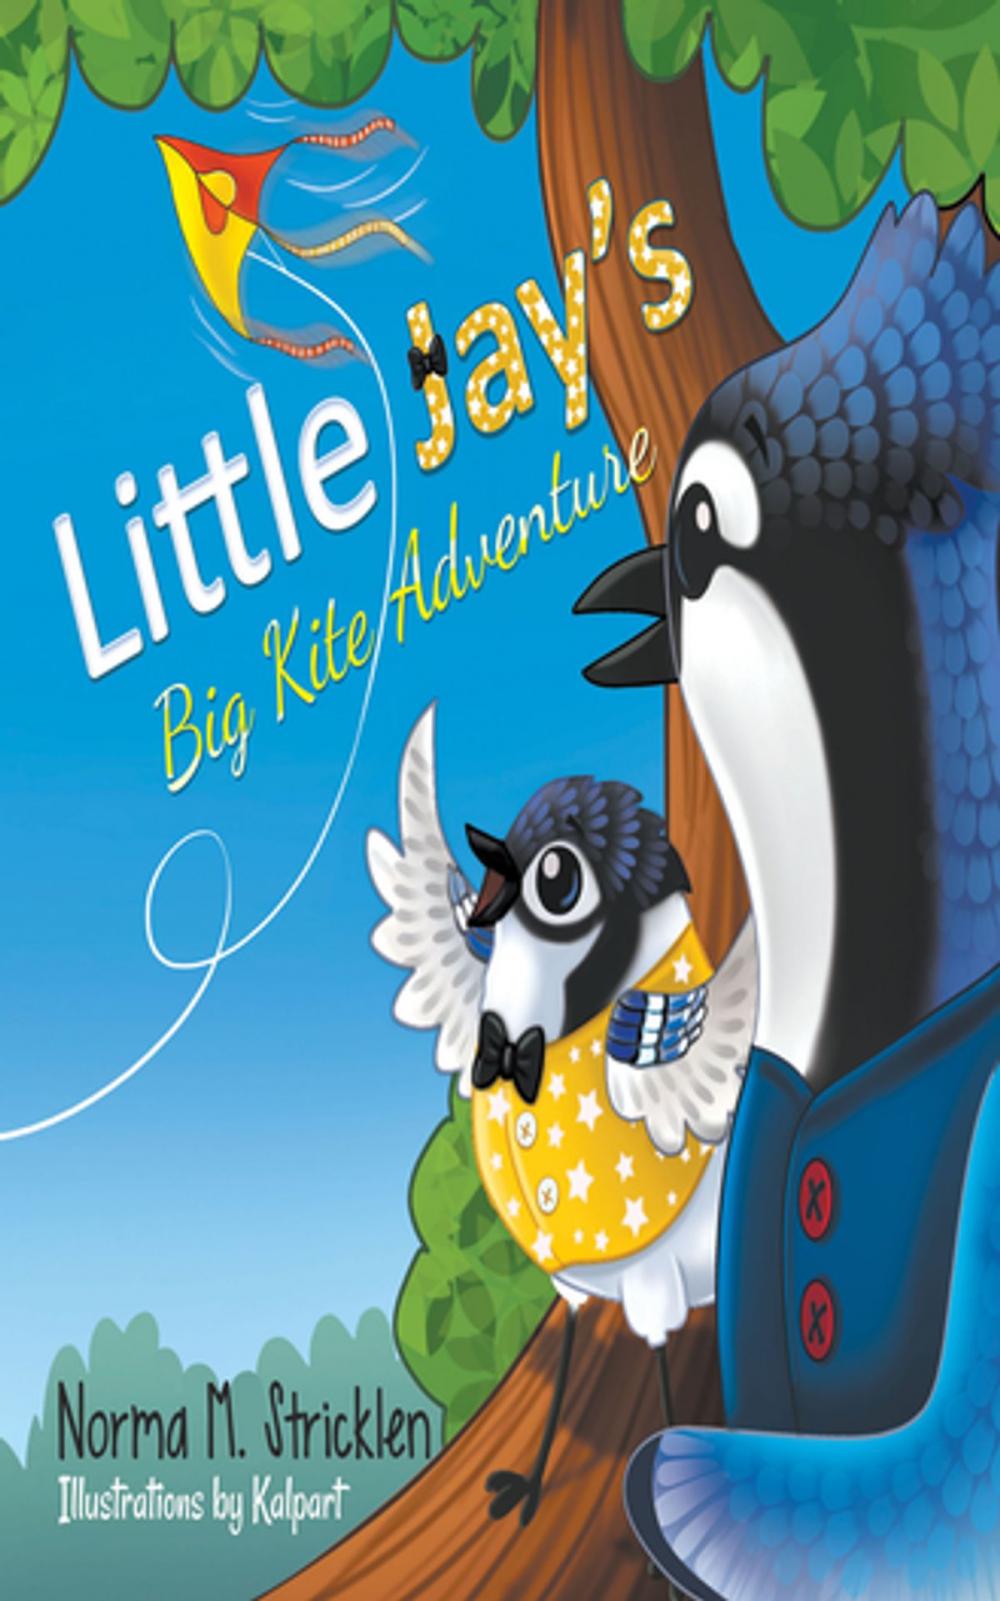 Big bigCover of Little Jay's Big Kite Adventure